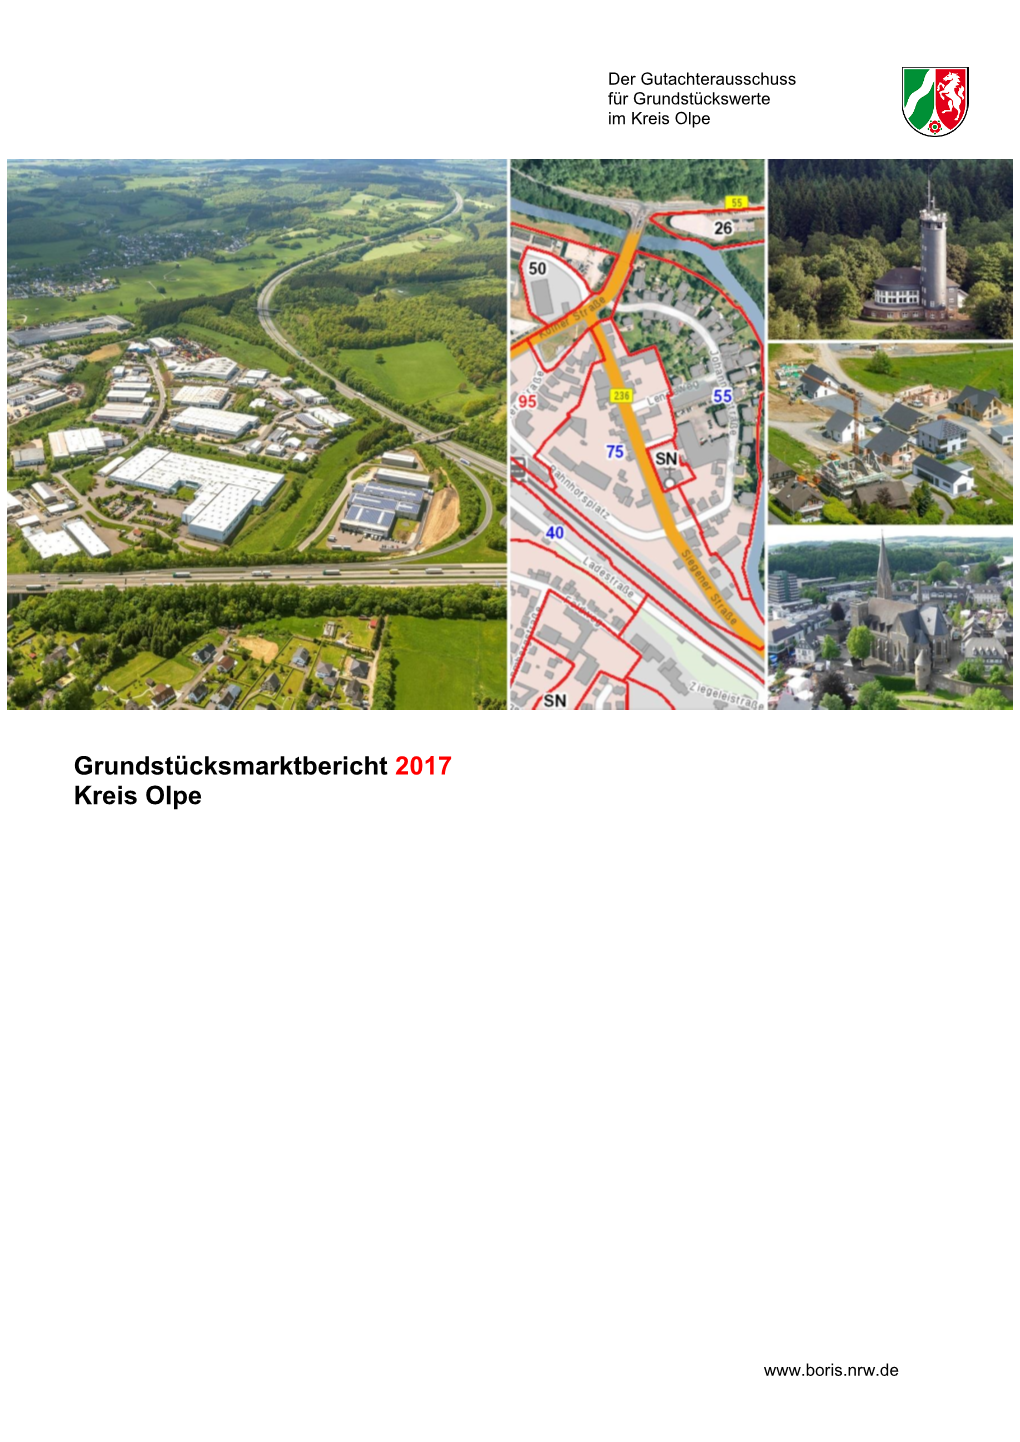 Grundstücksmarktbericht 2017 Kreis Olpe